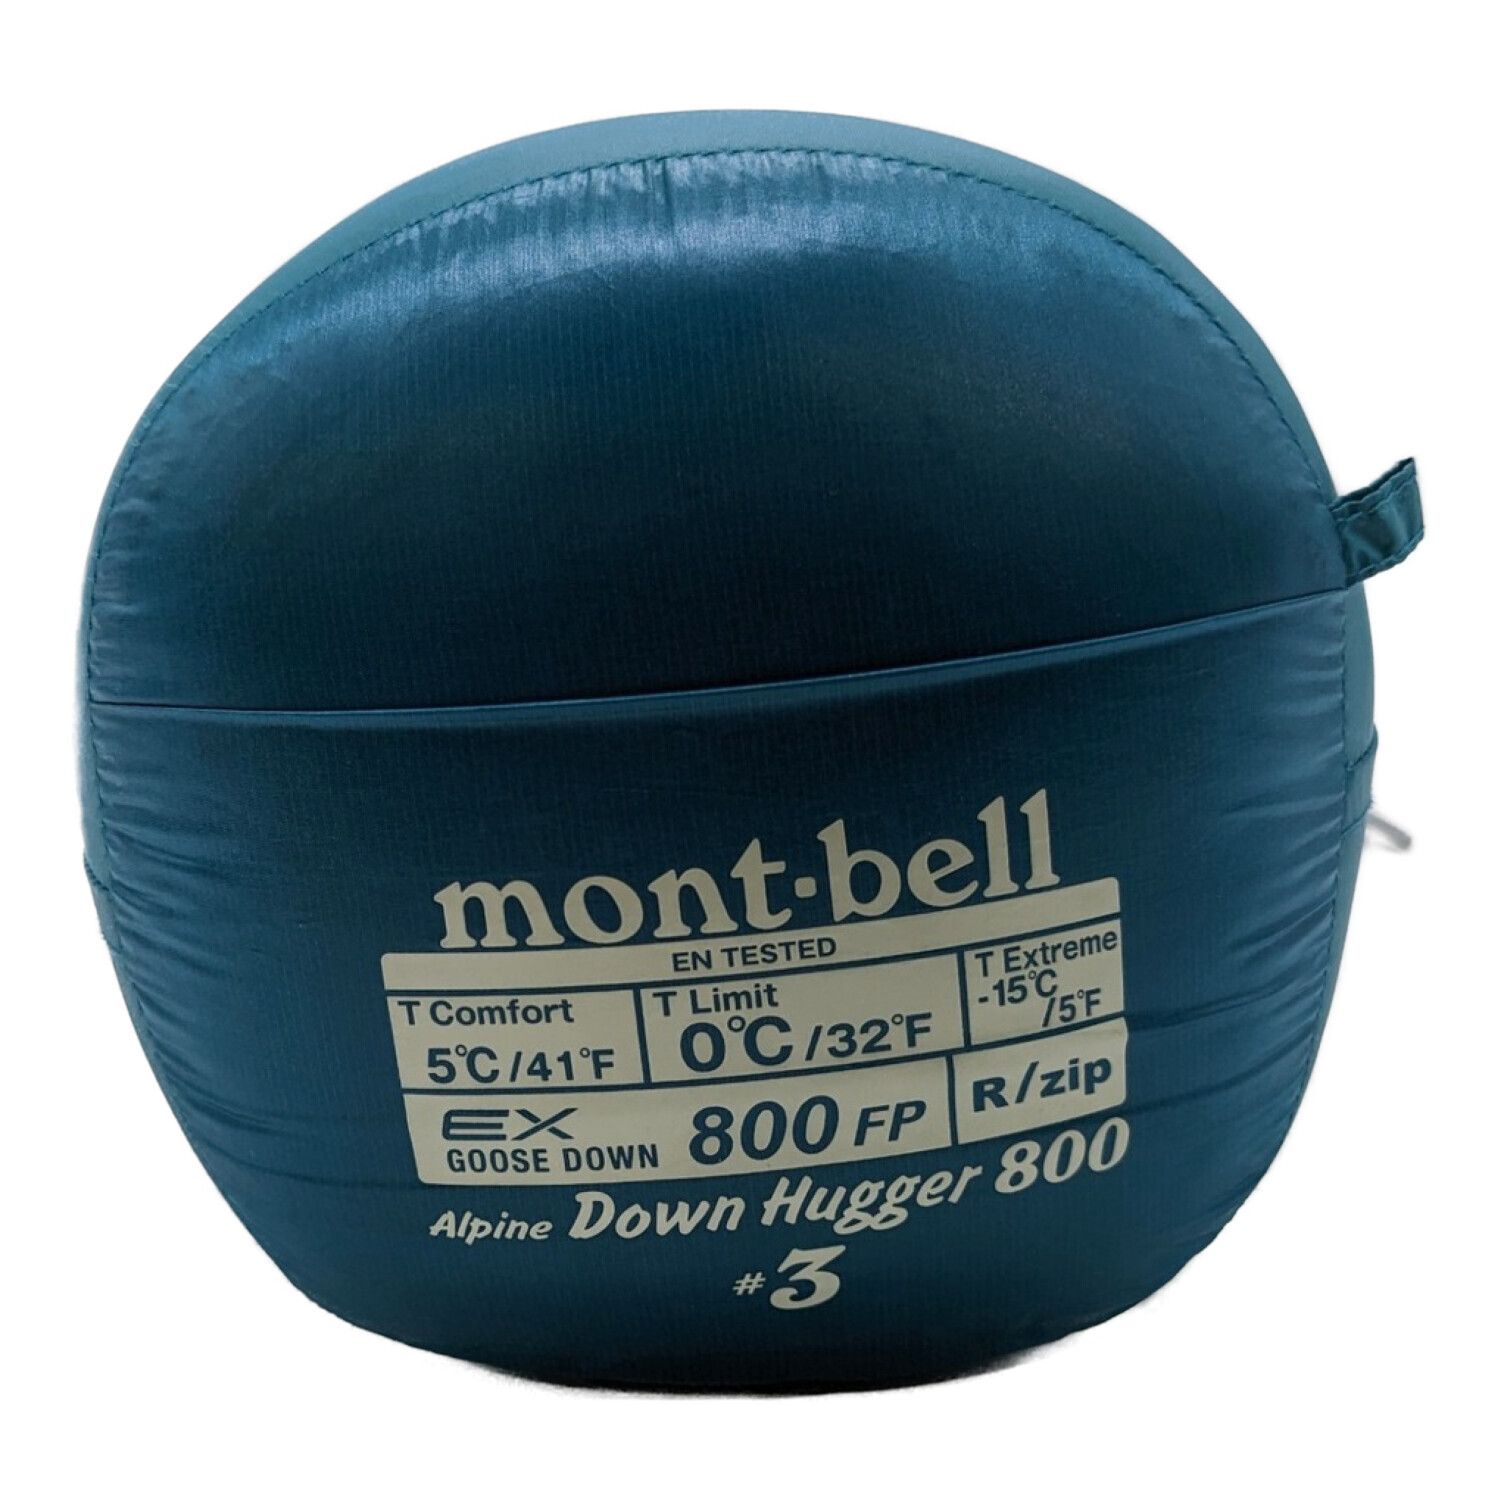 mont-bell (モンベル) ダウンシュラフ アルパインダウンハガー800 #3 